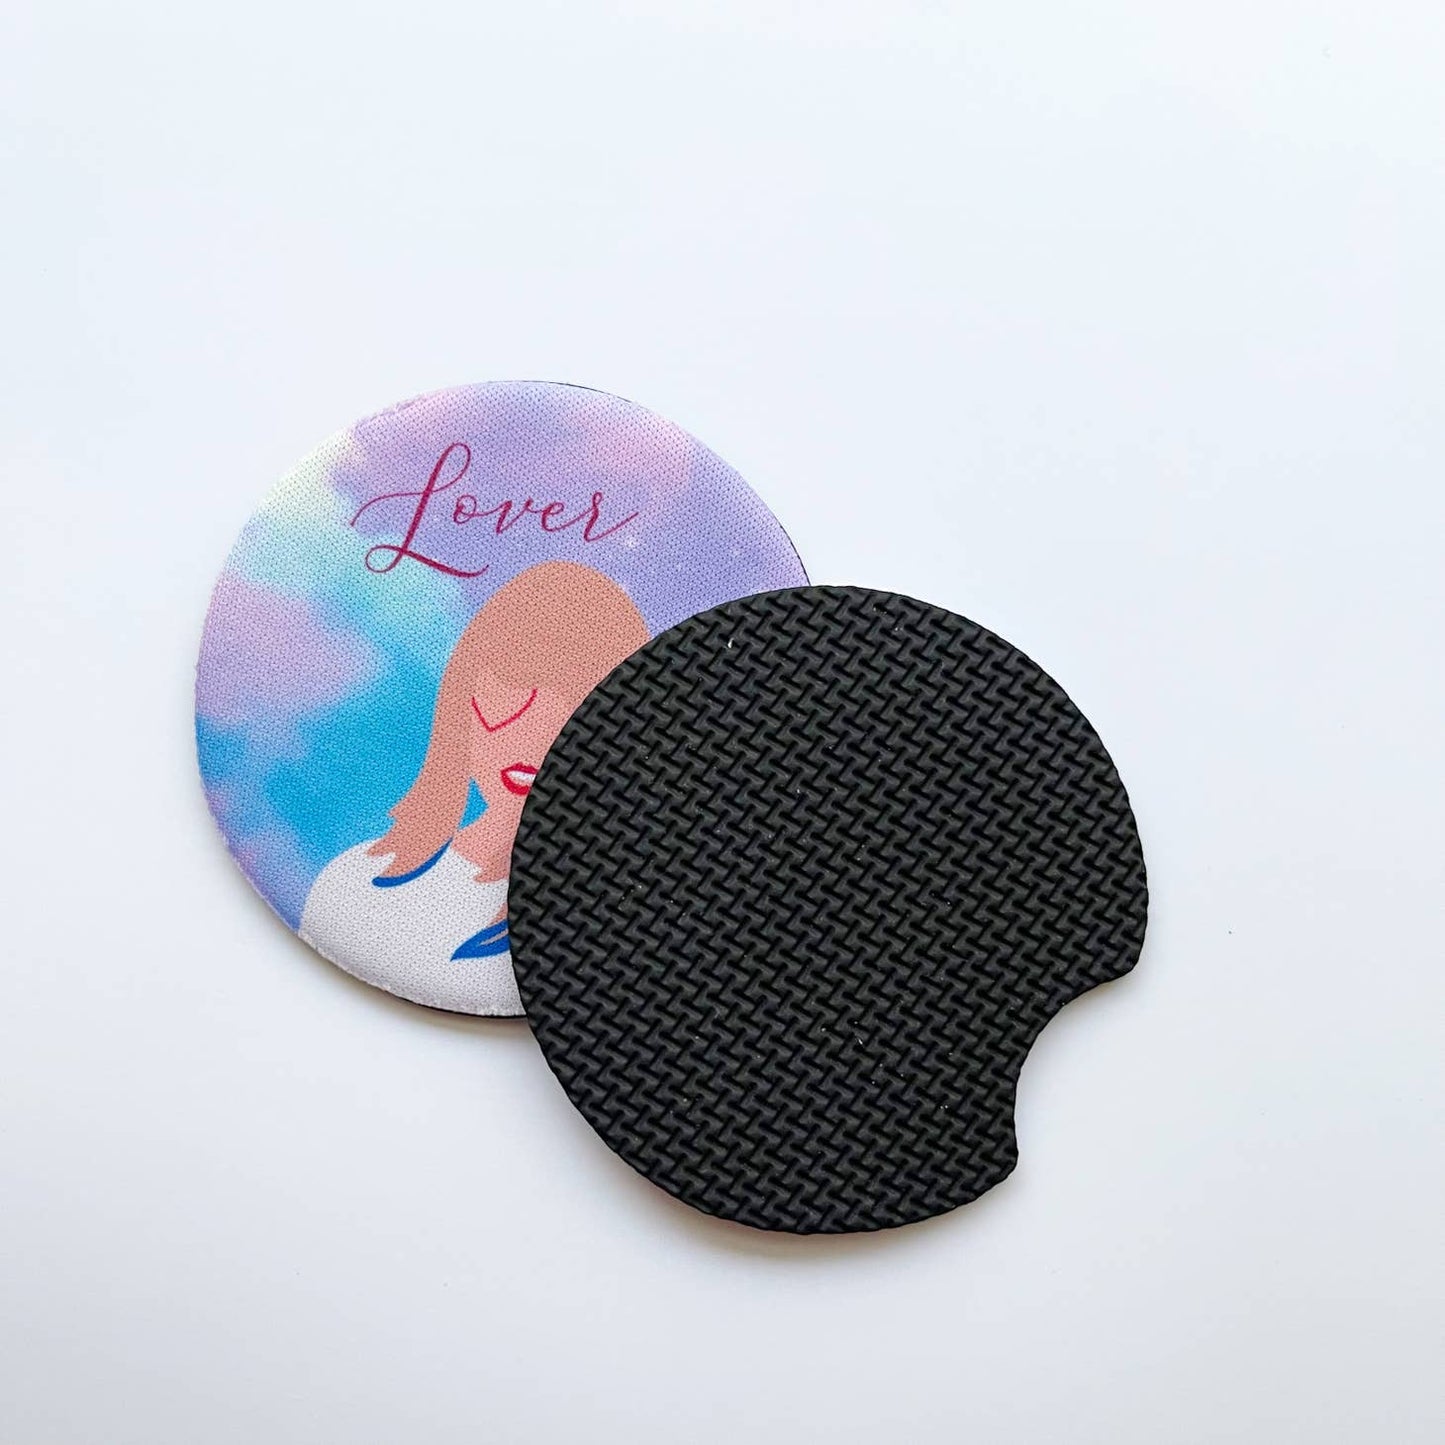 Taylor "Lover" Album Inspired Design Car Coasters